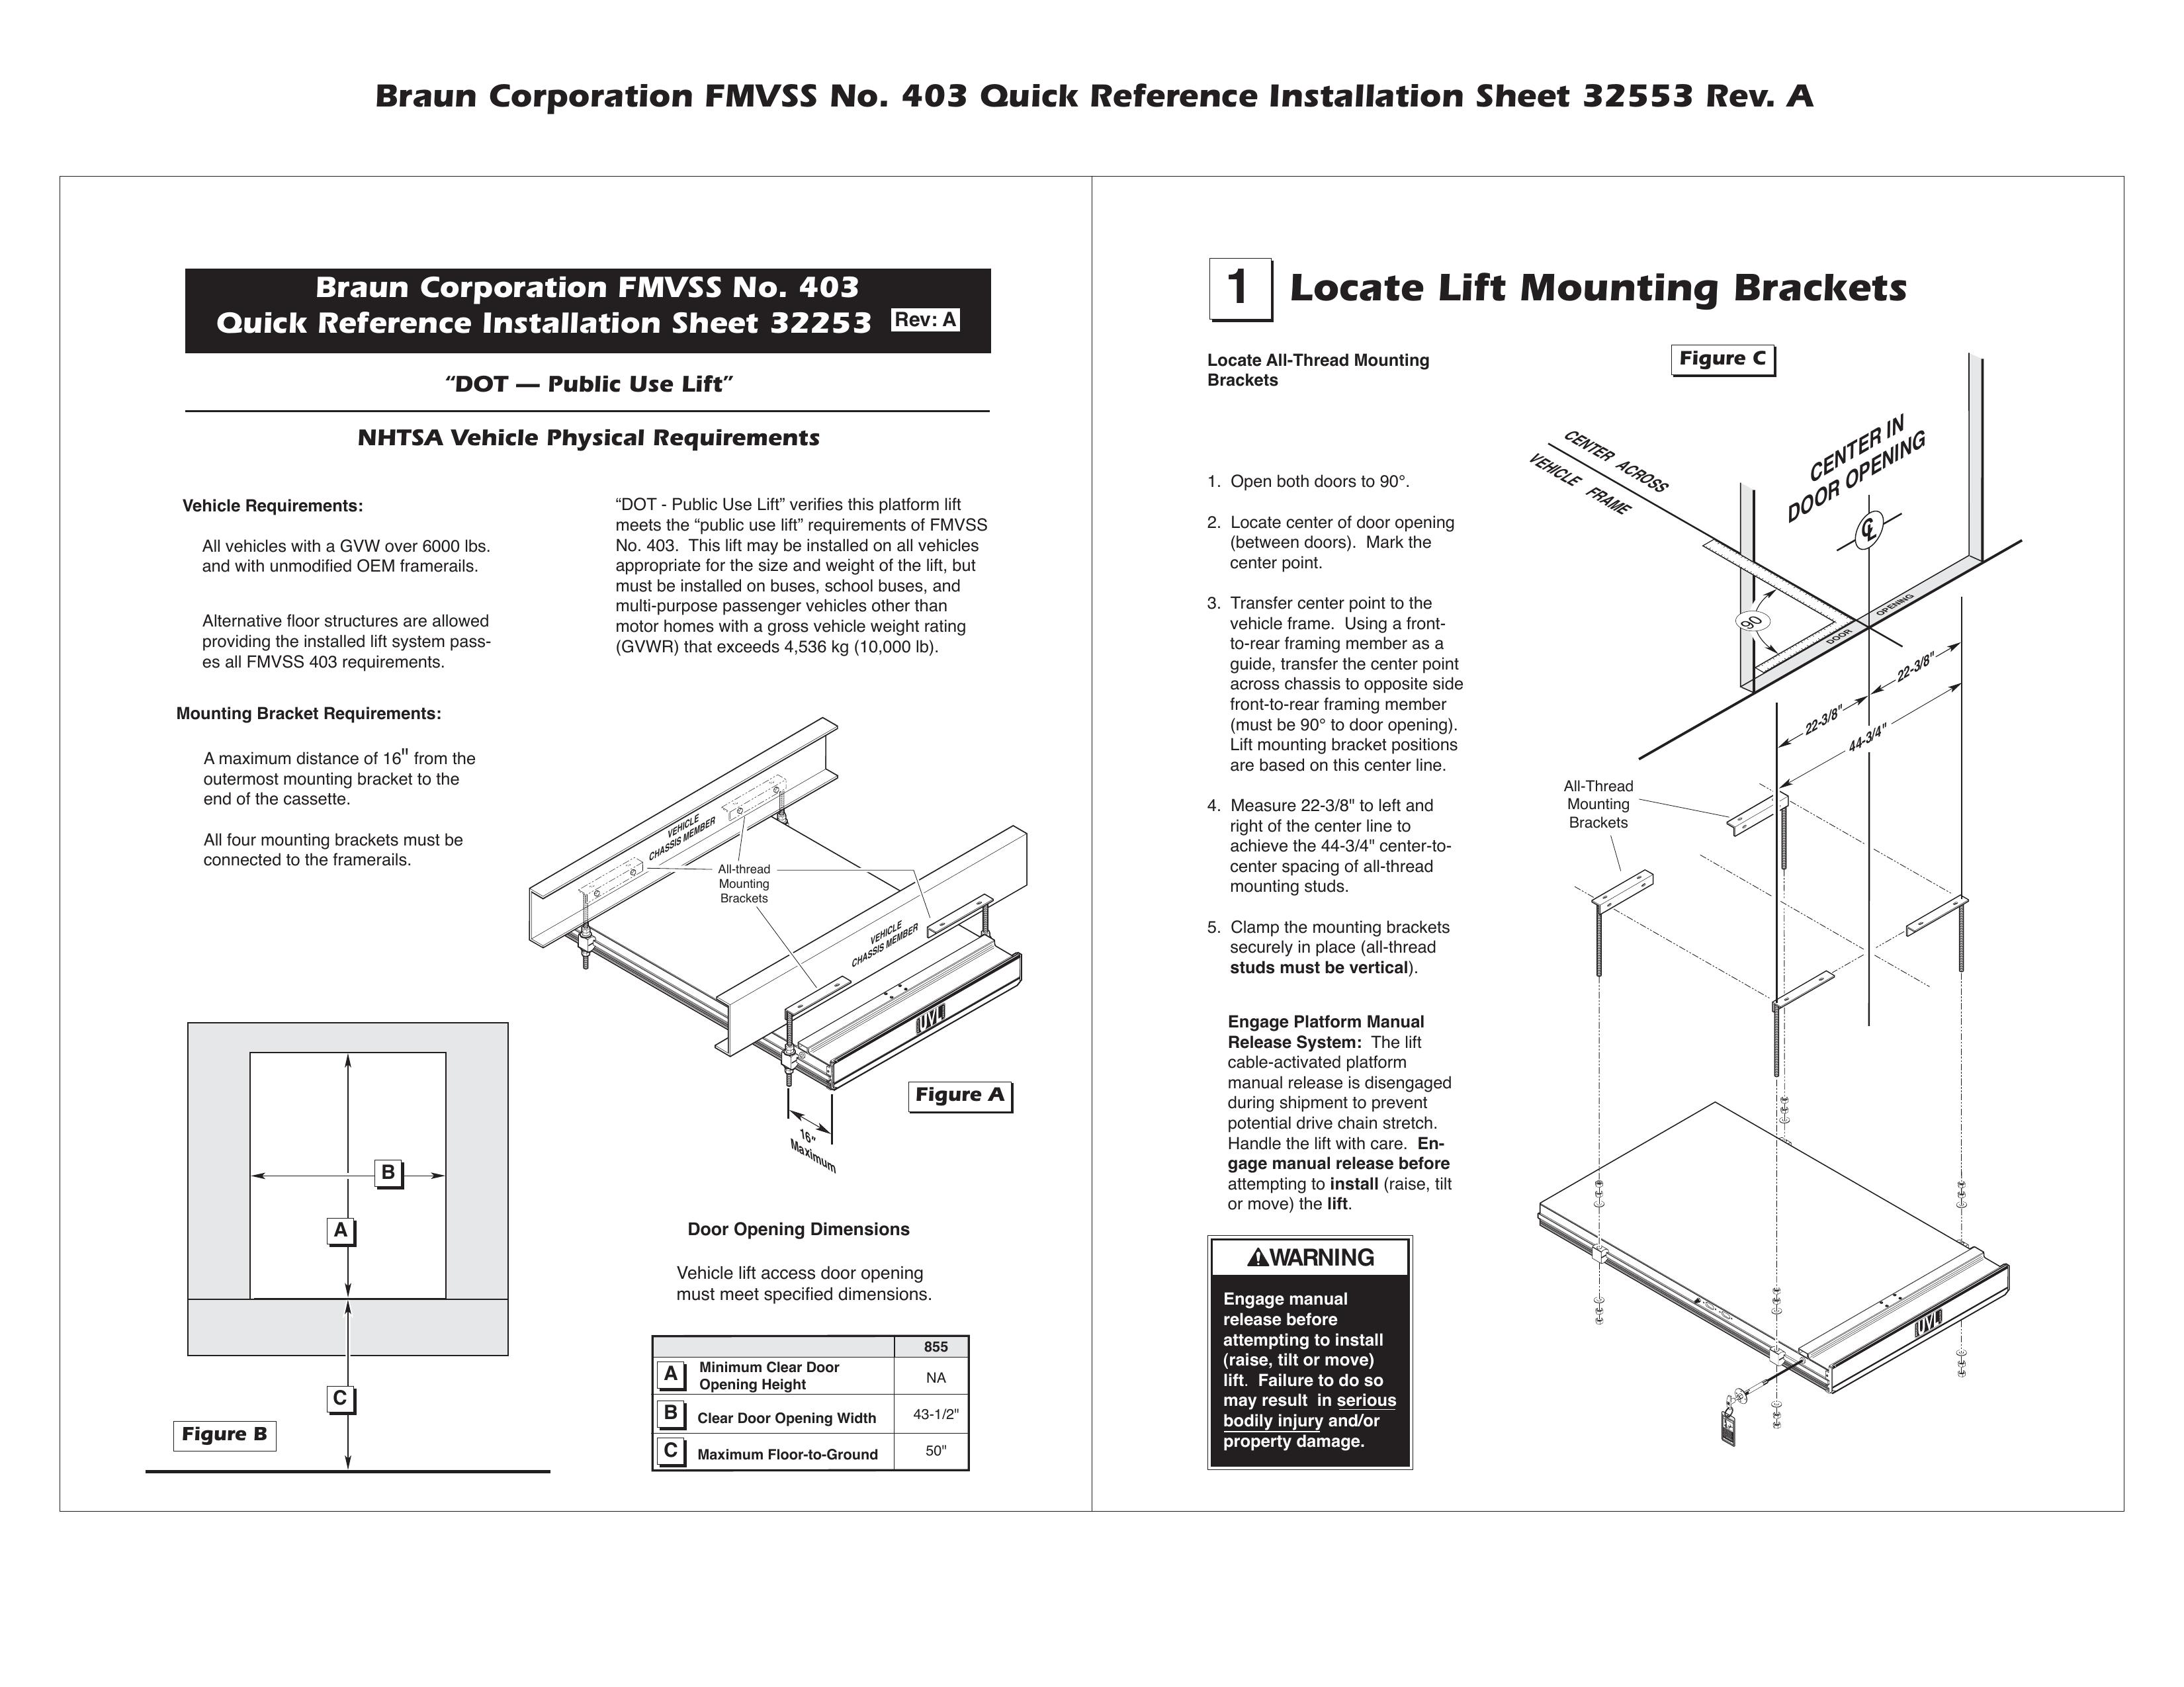 Braun Braun Corporation FMVSS No. 403 Personal Lift User Manual